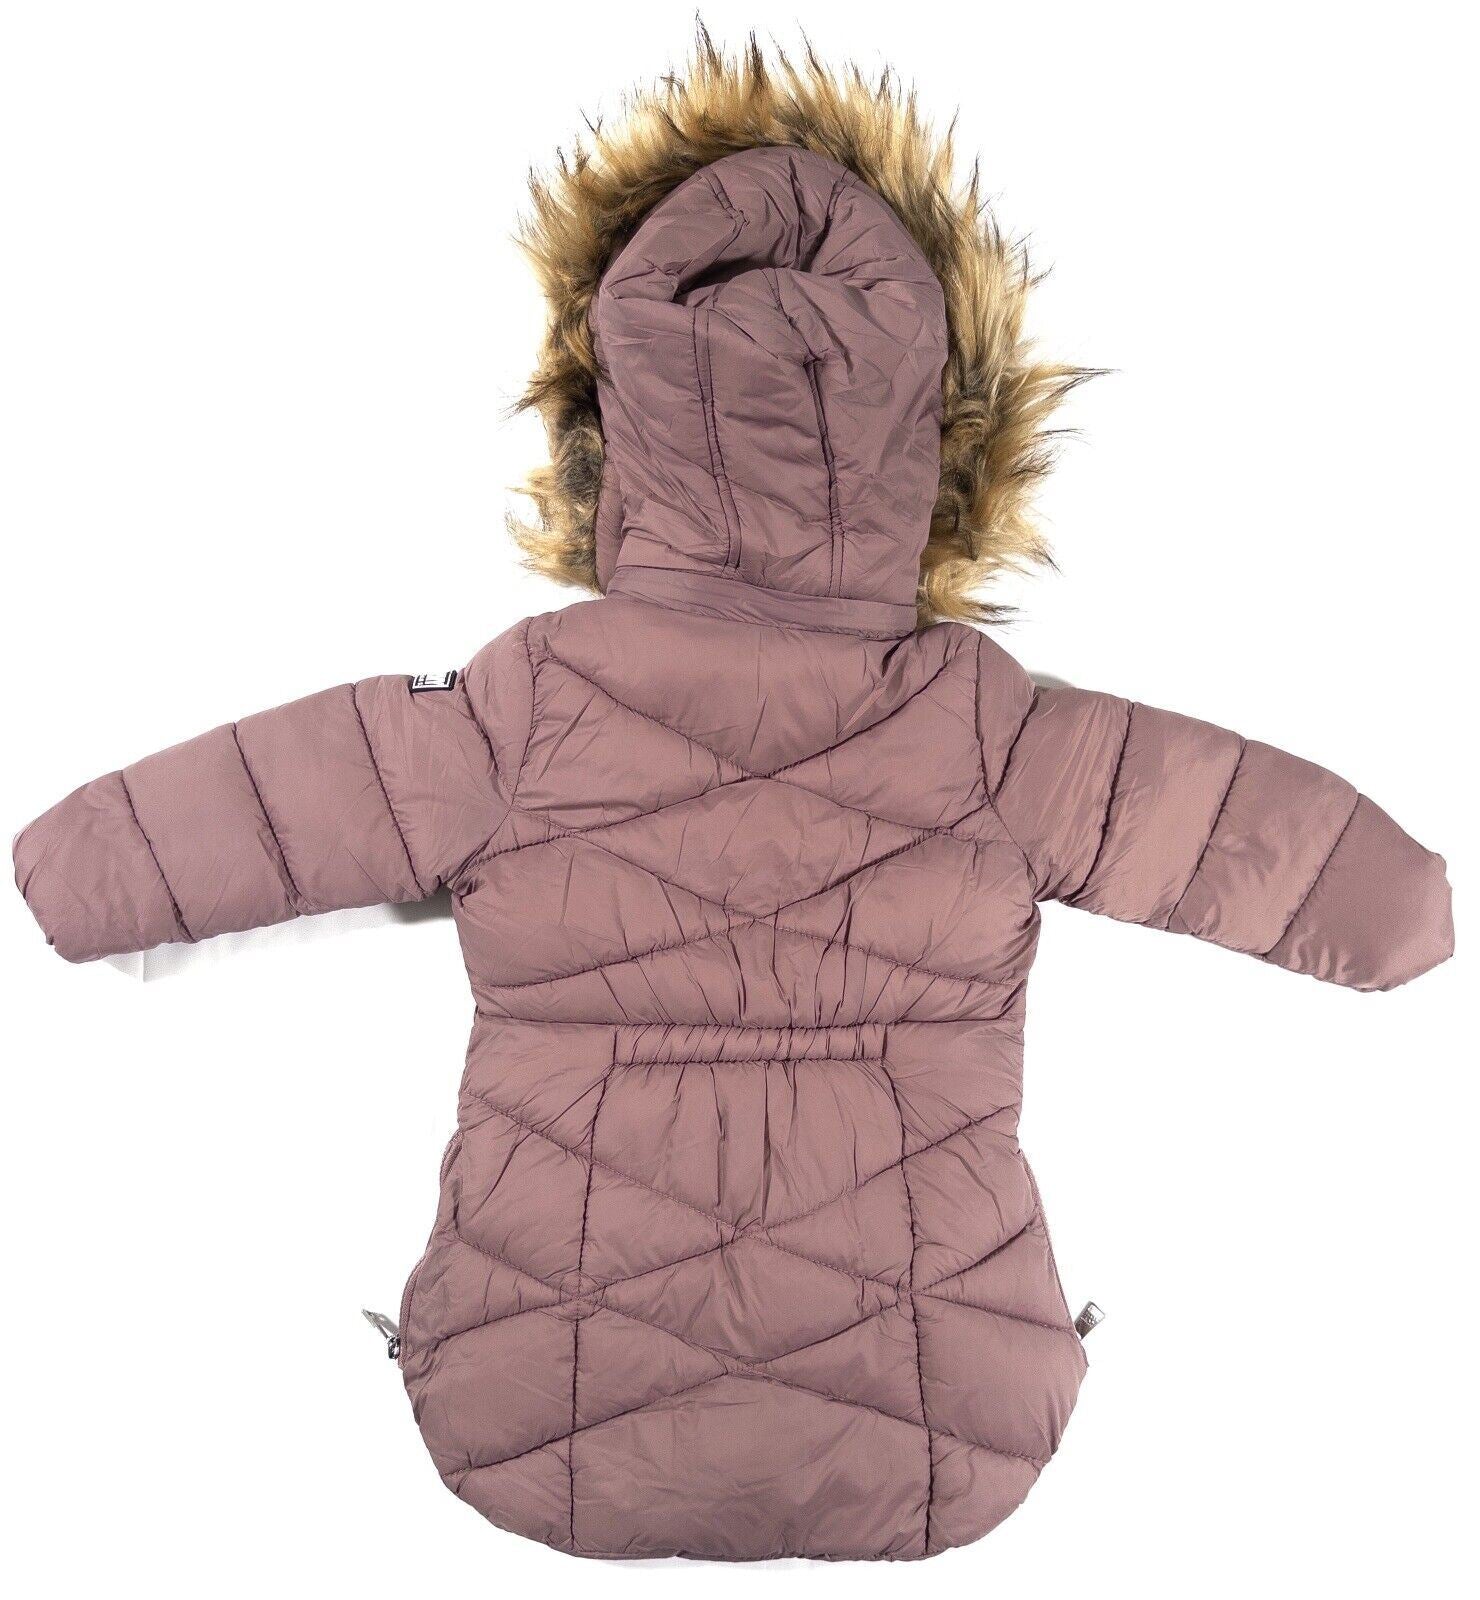 DKNY JEANS Infant Kids Girls Purple Hooded Puffer Coat Size UK 2 Years